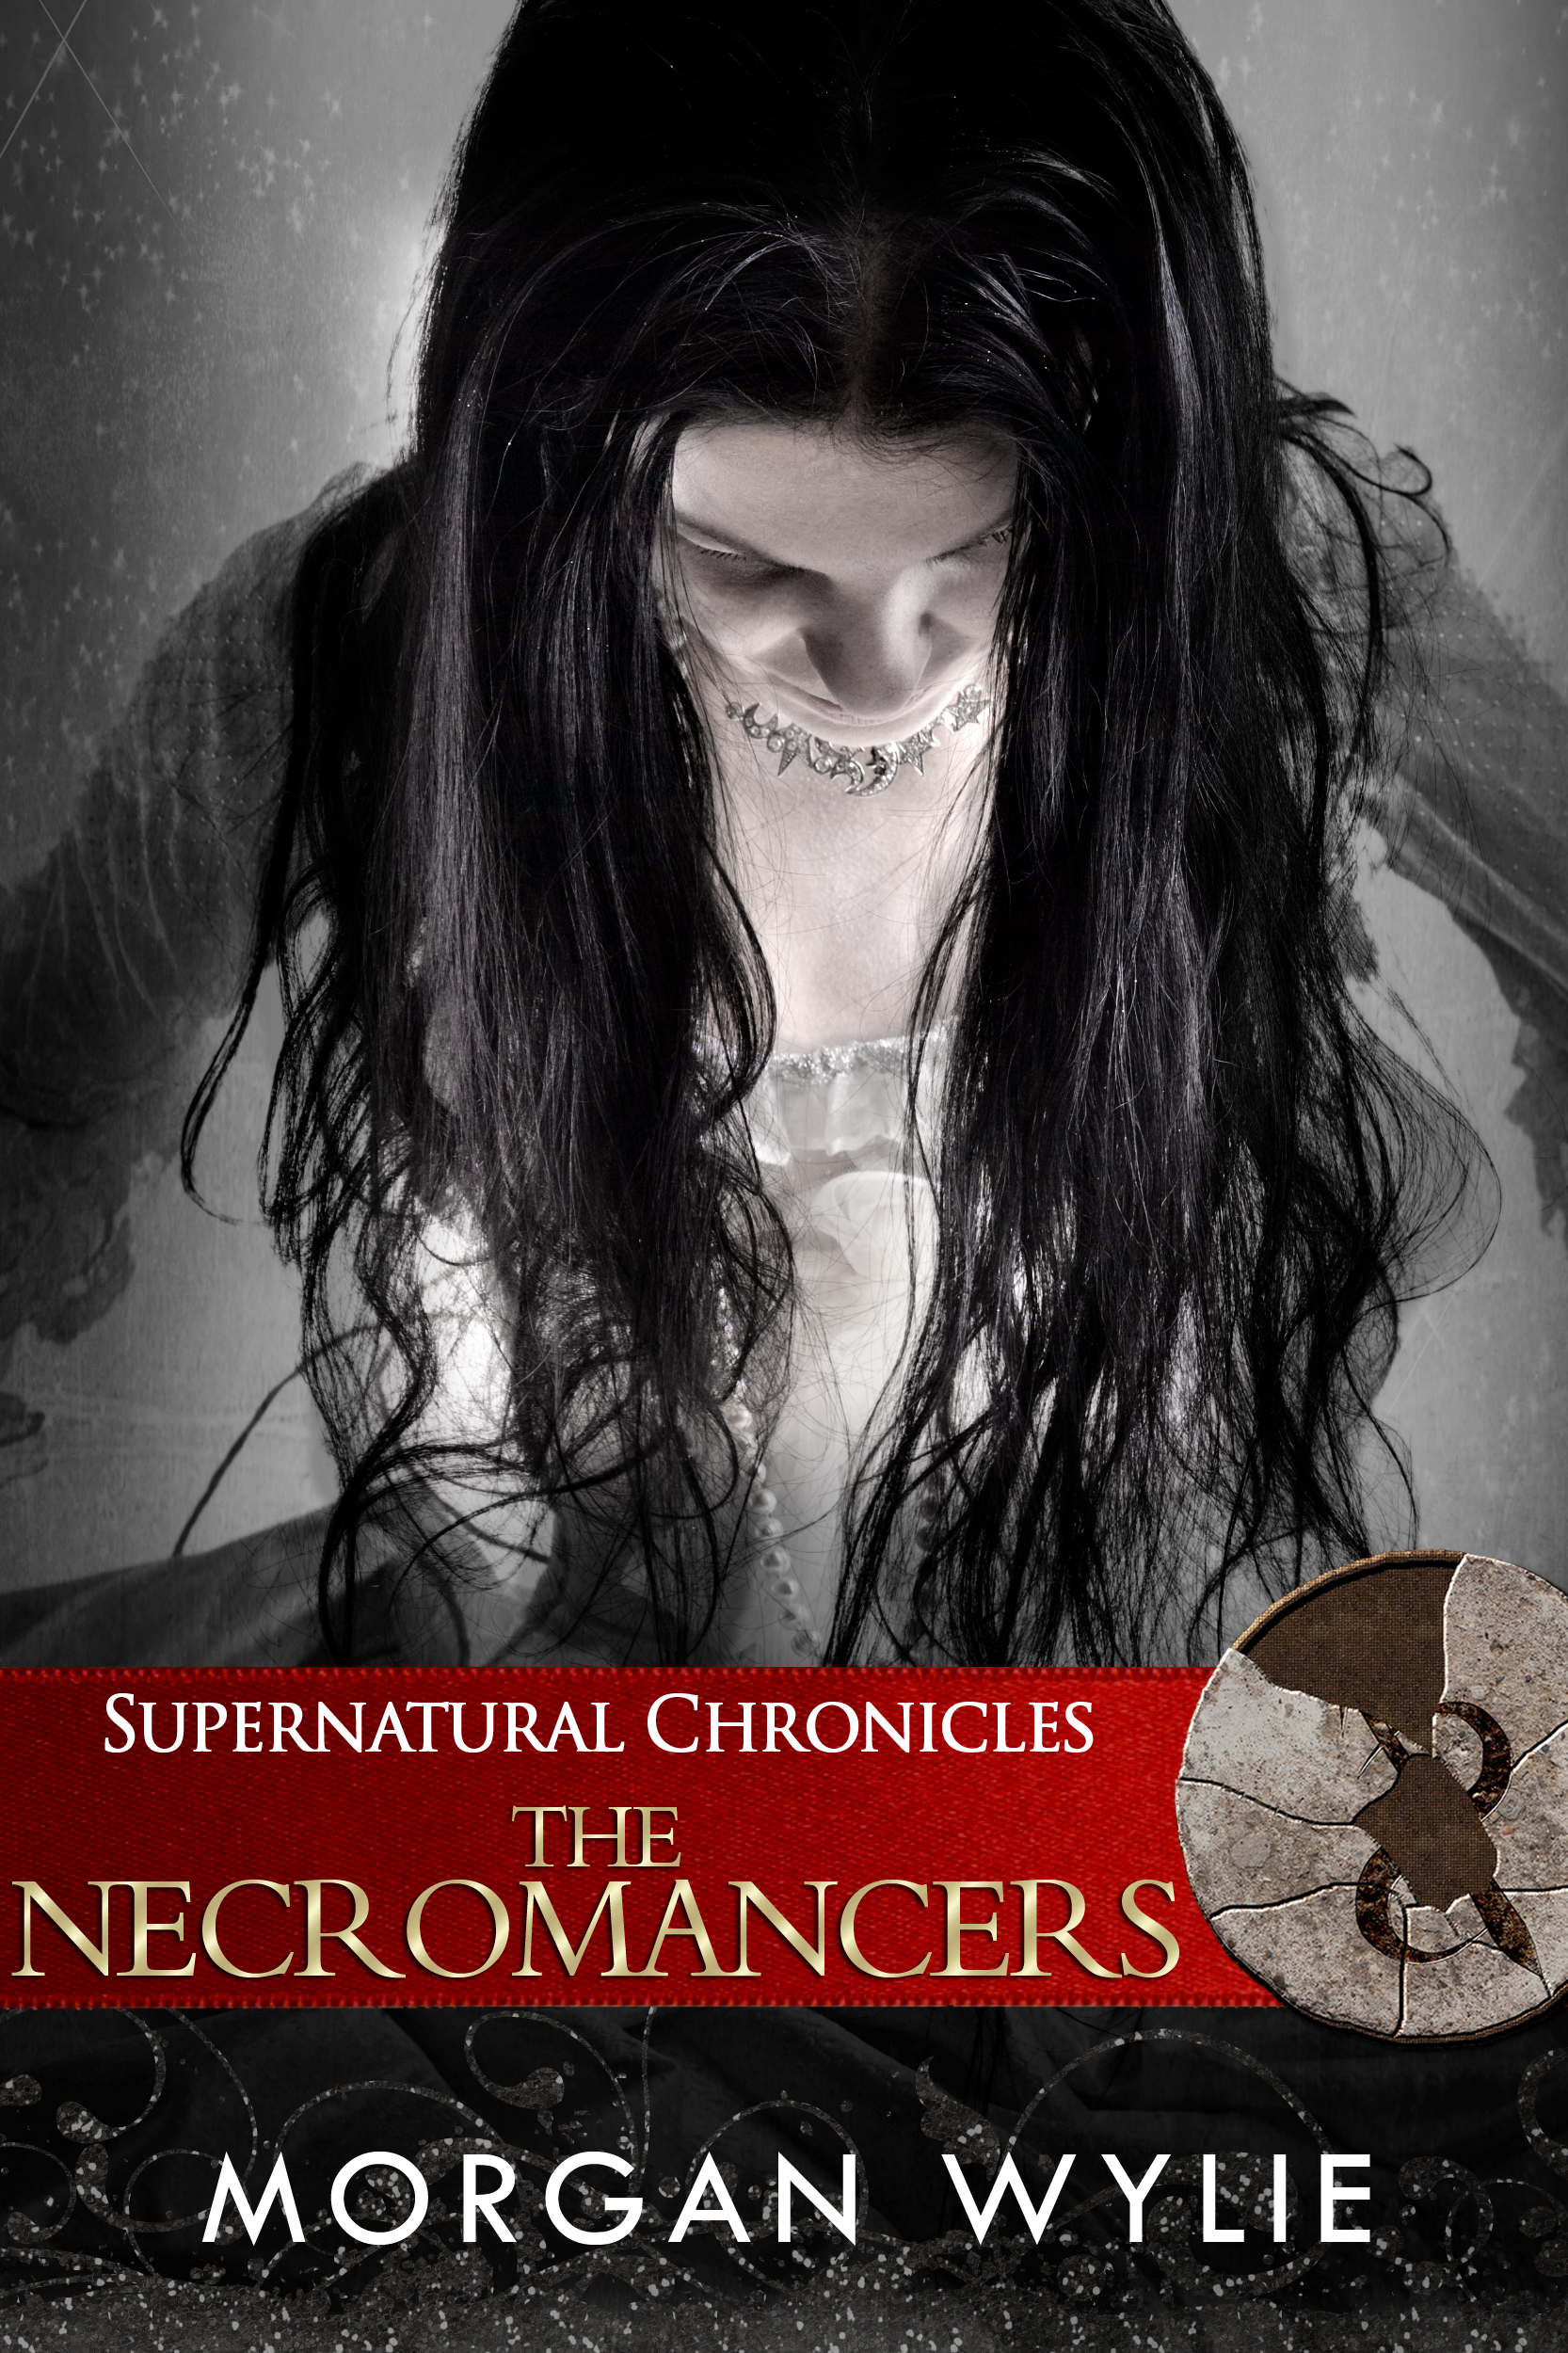 Morgan Wylie & The Necromancers